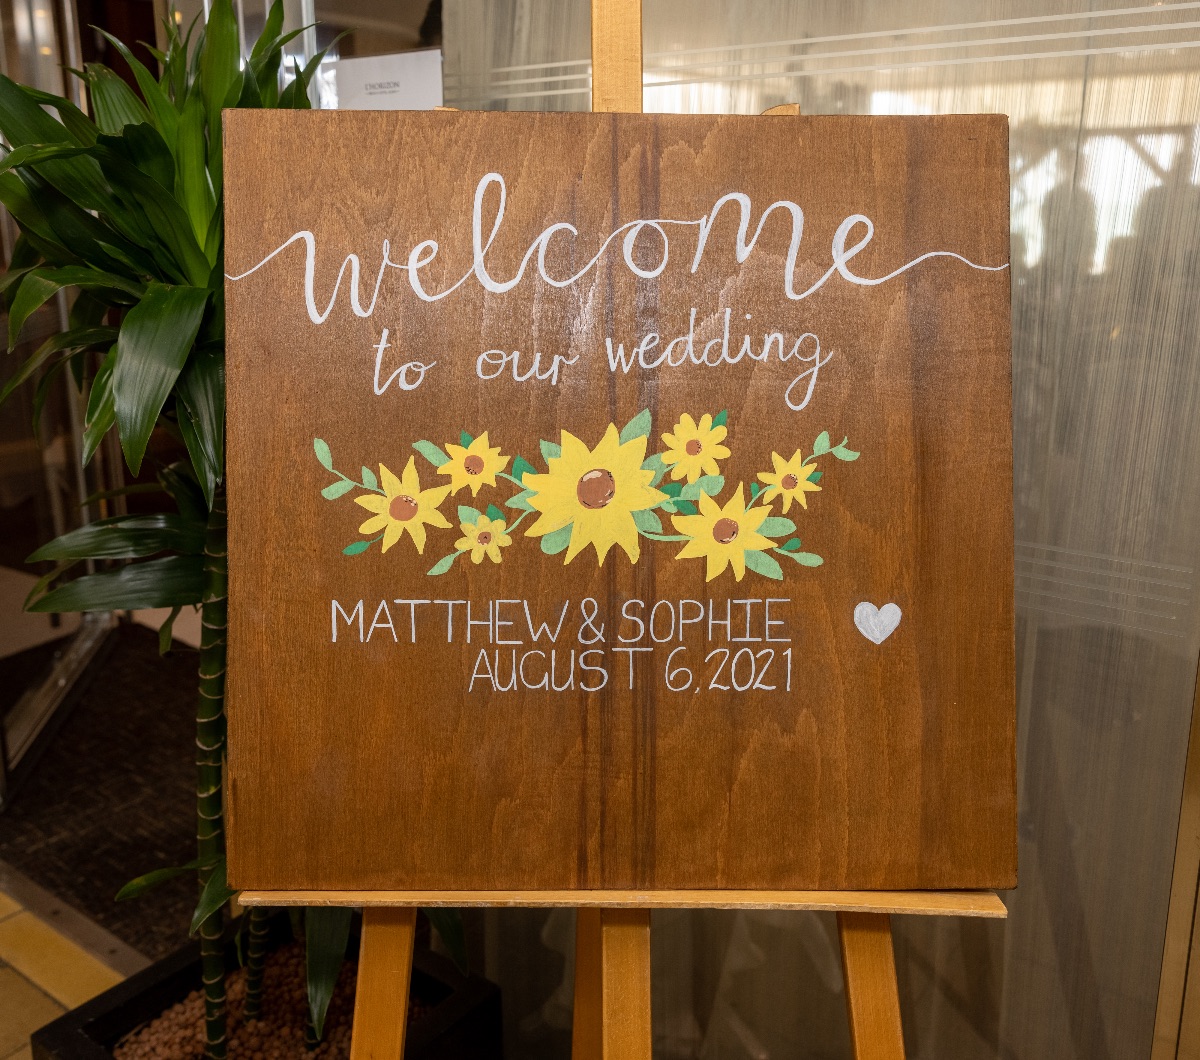 Real Wedding Image for Matthew